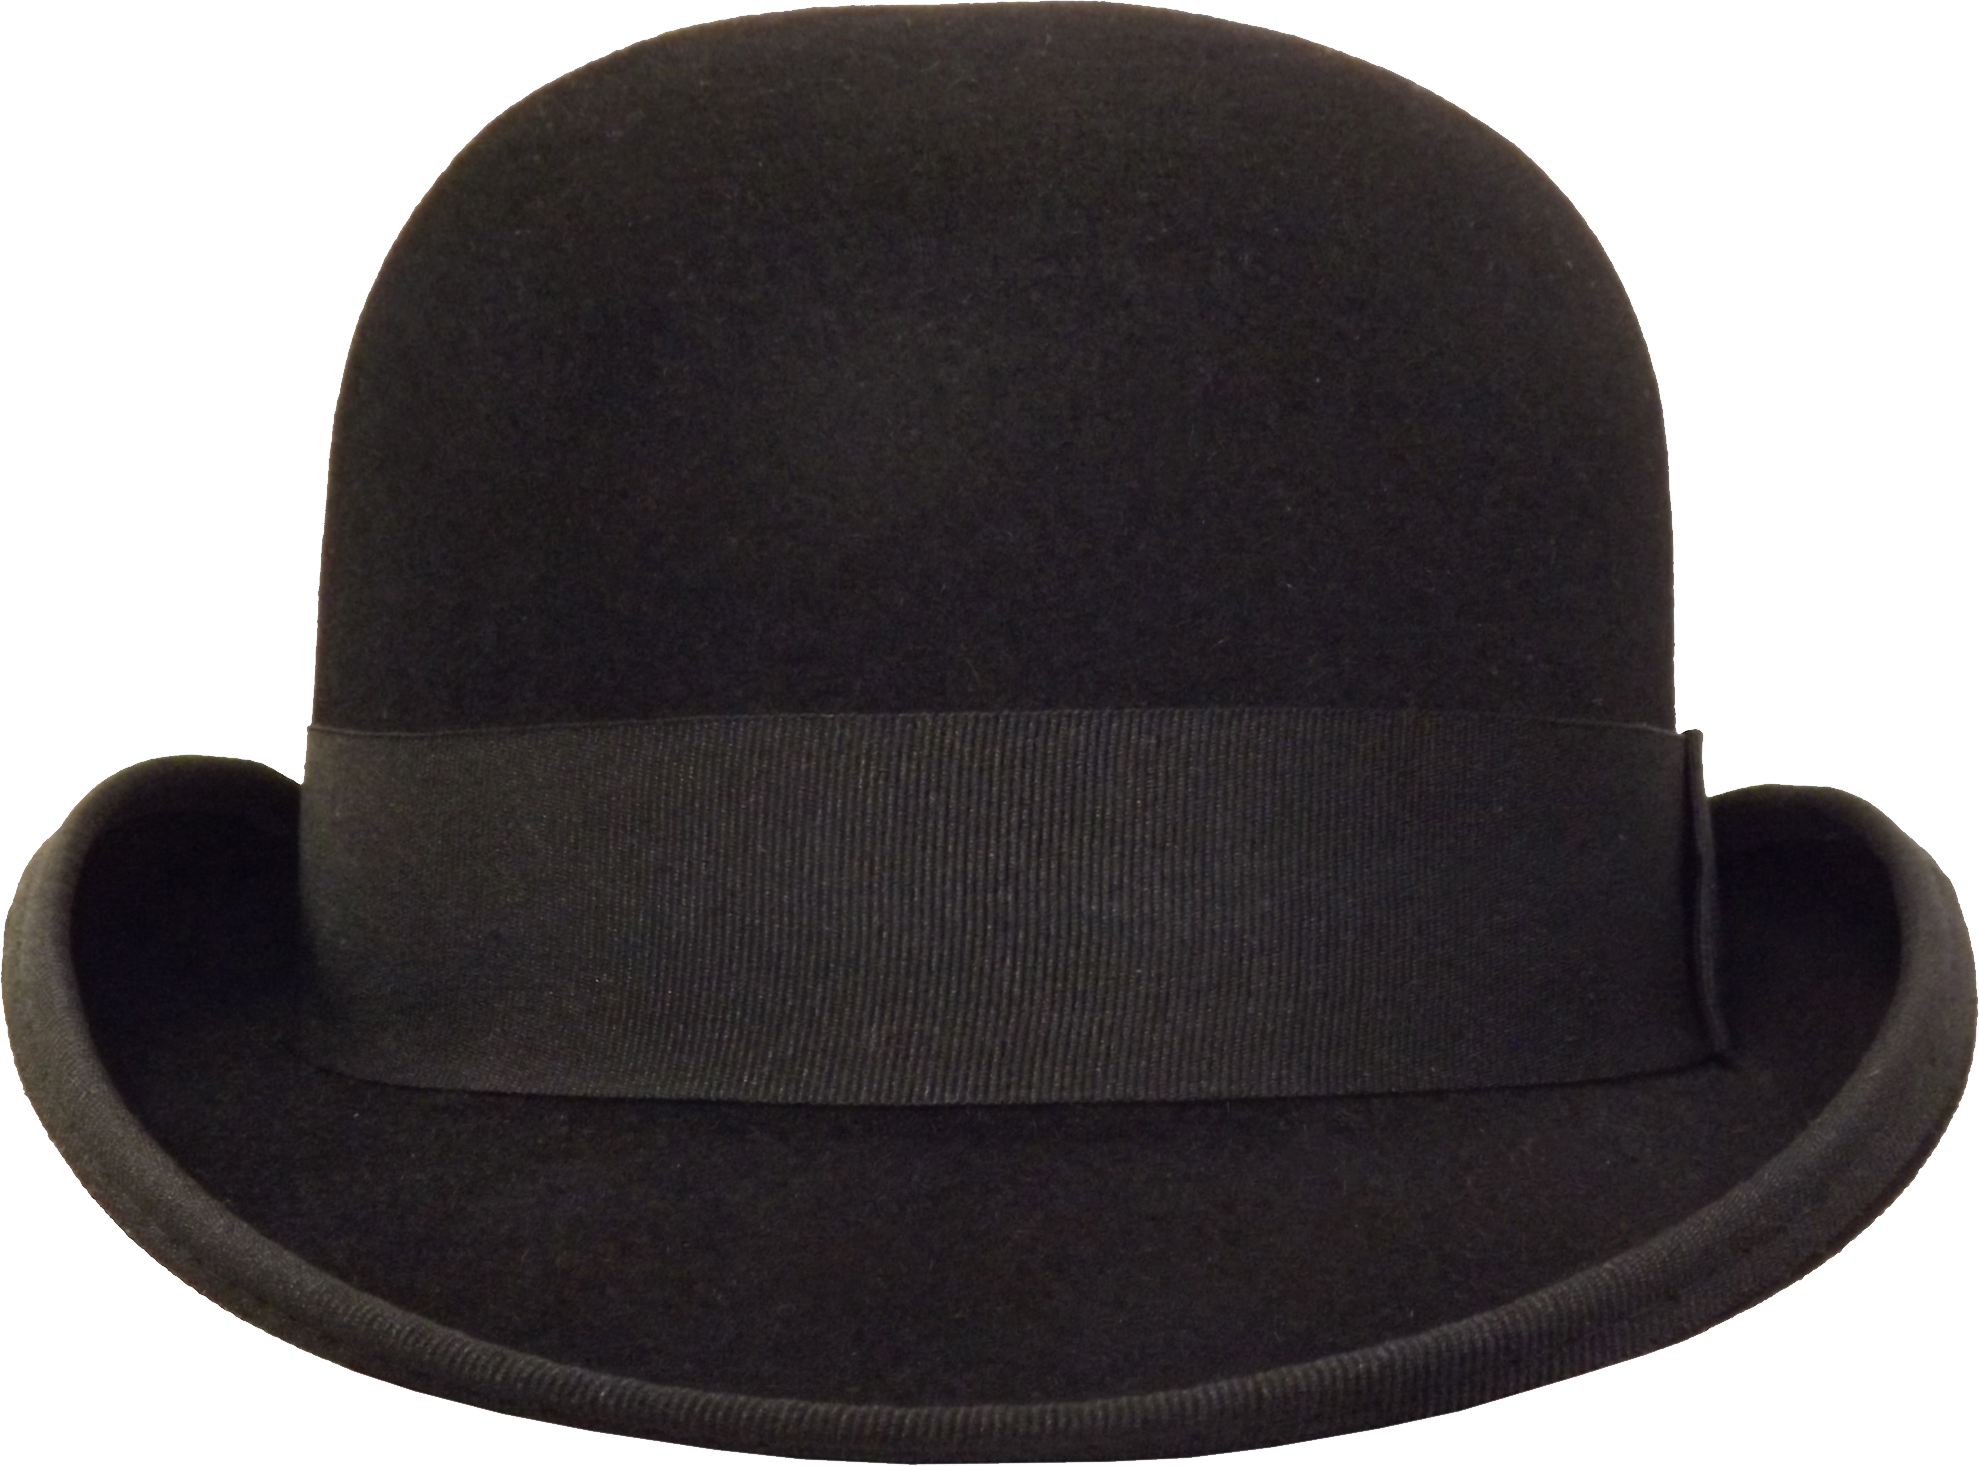 Bowler hat PNG images Download 